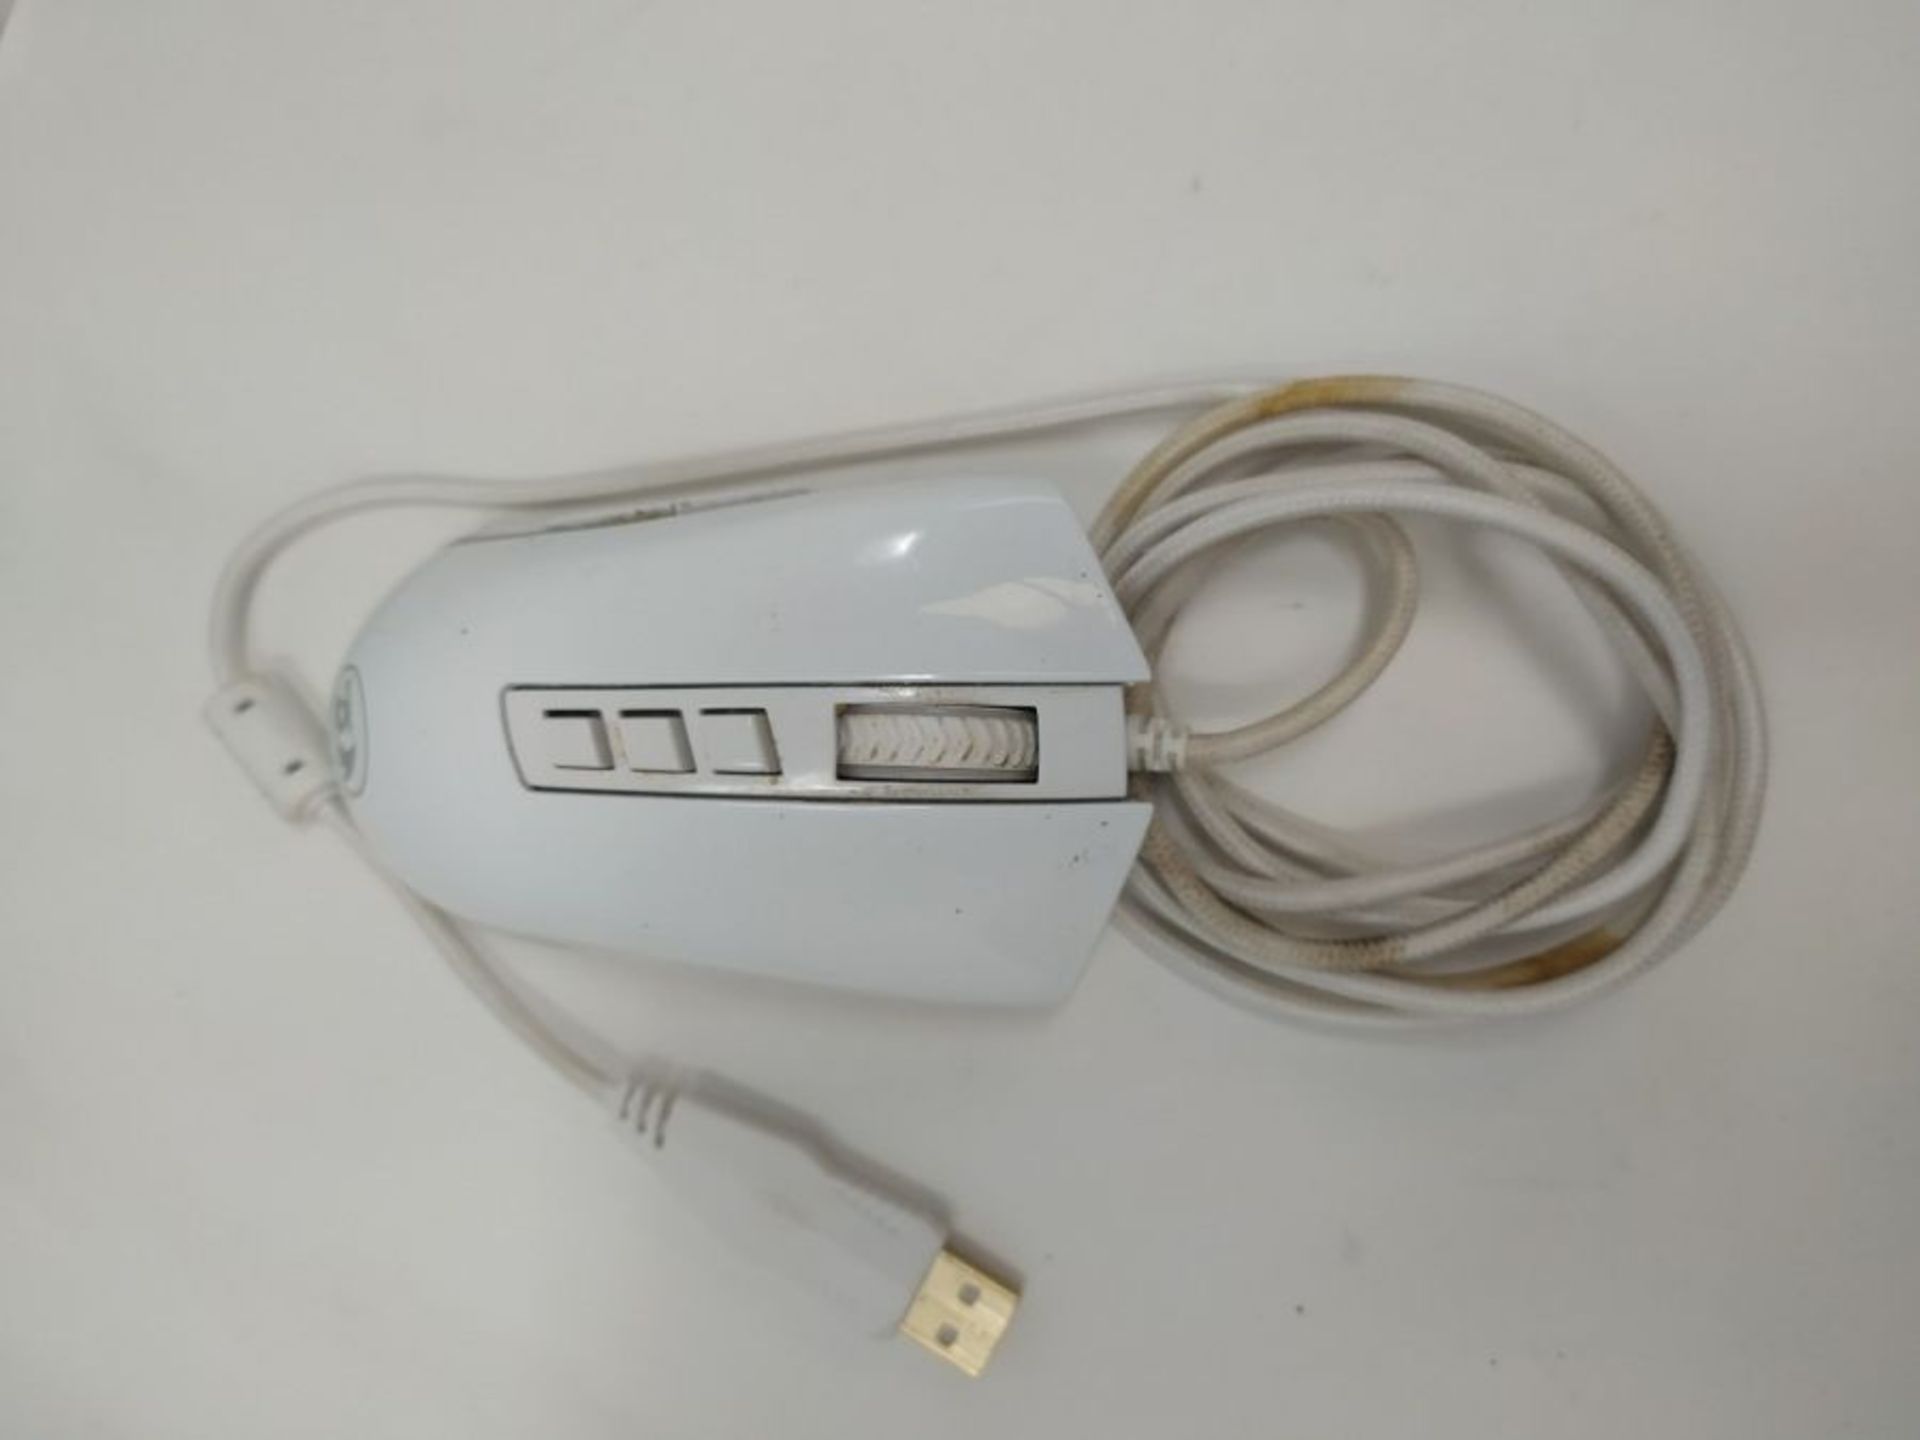 Redragon M711 Cobra Gaming Mouse with 16.8 Million RGB Color Backlit, 10,000 DPI Adjus - Image 2 of 2